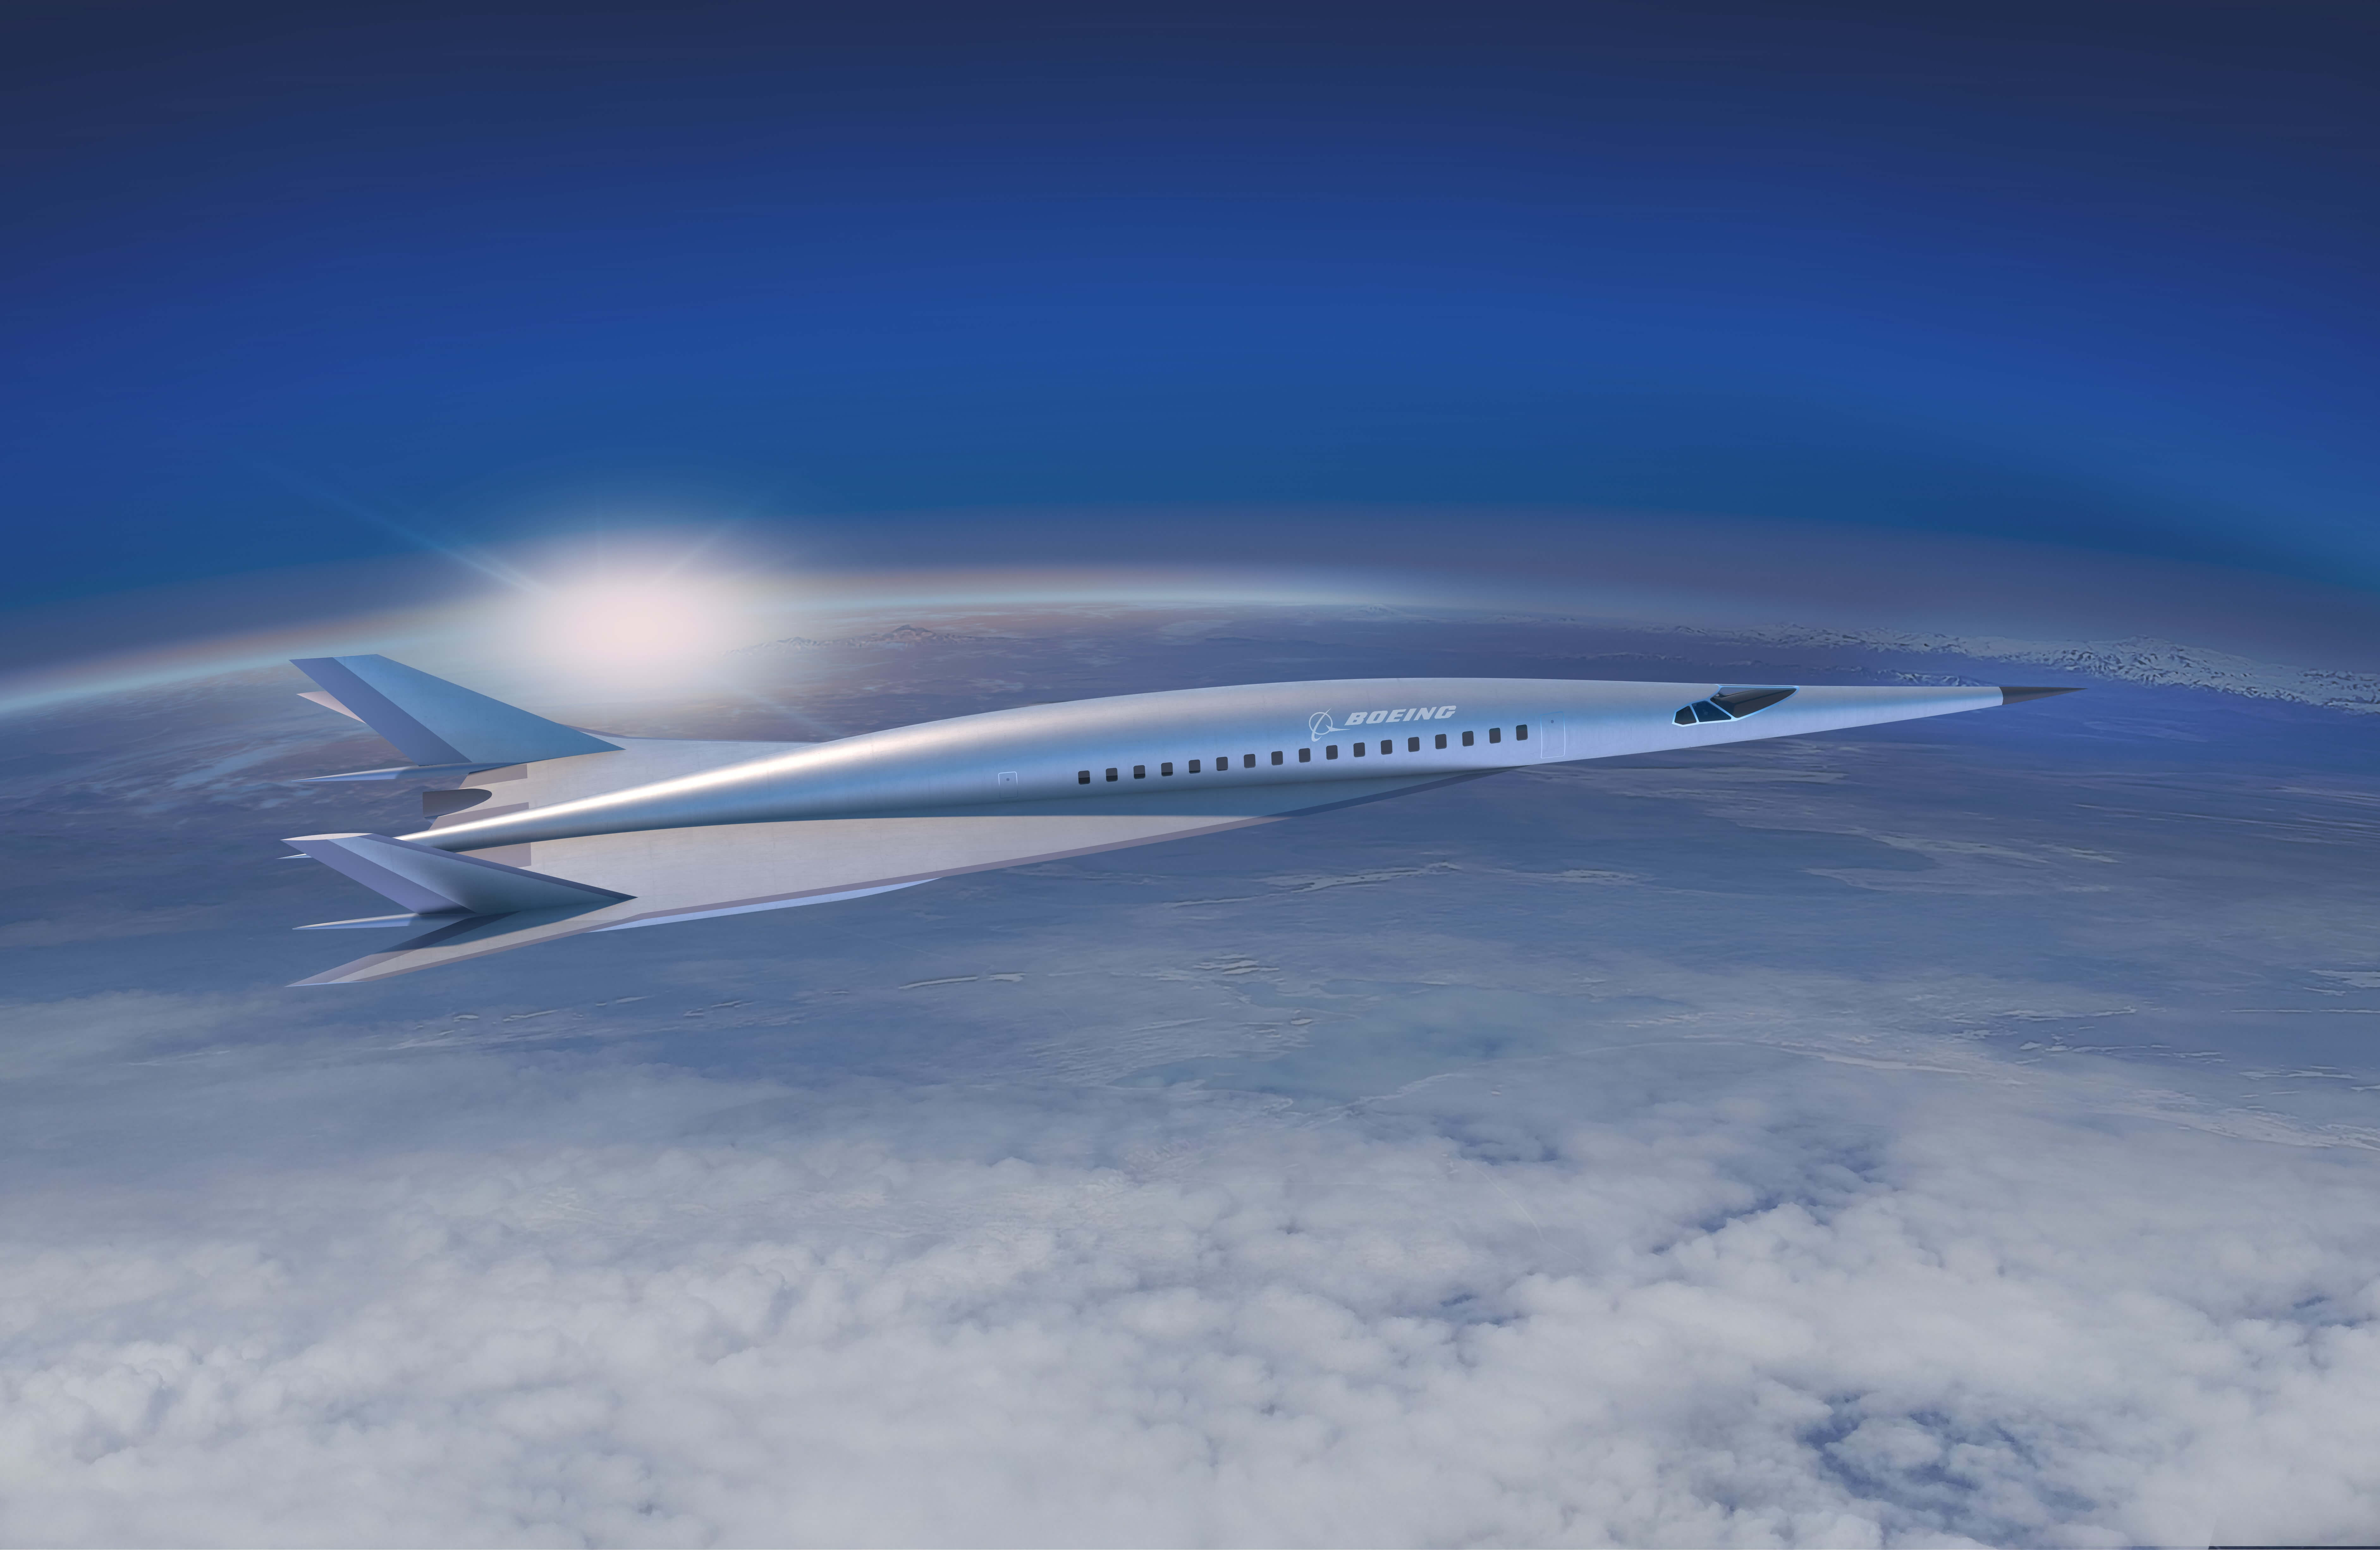 Boeing reveals its hypersonic passenger aircraft